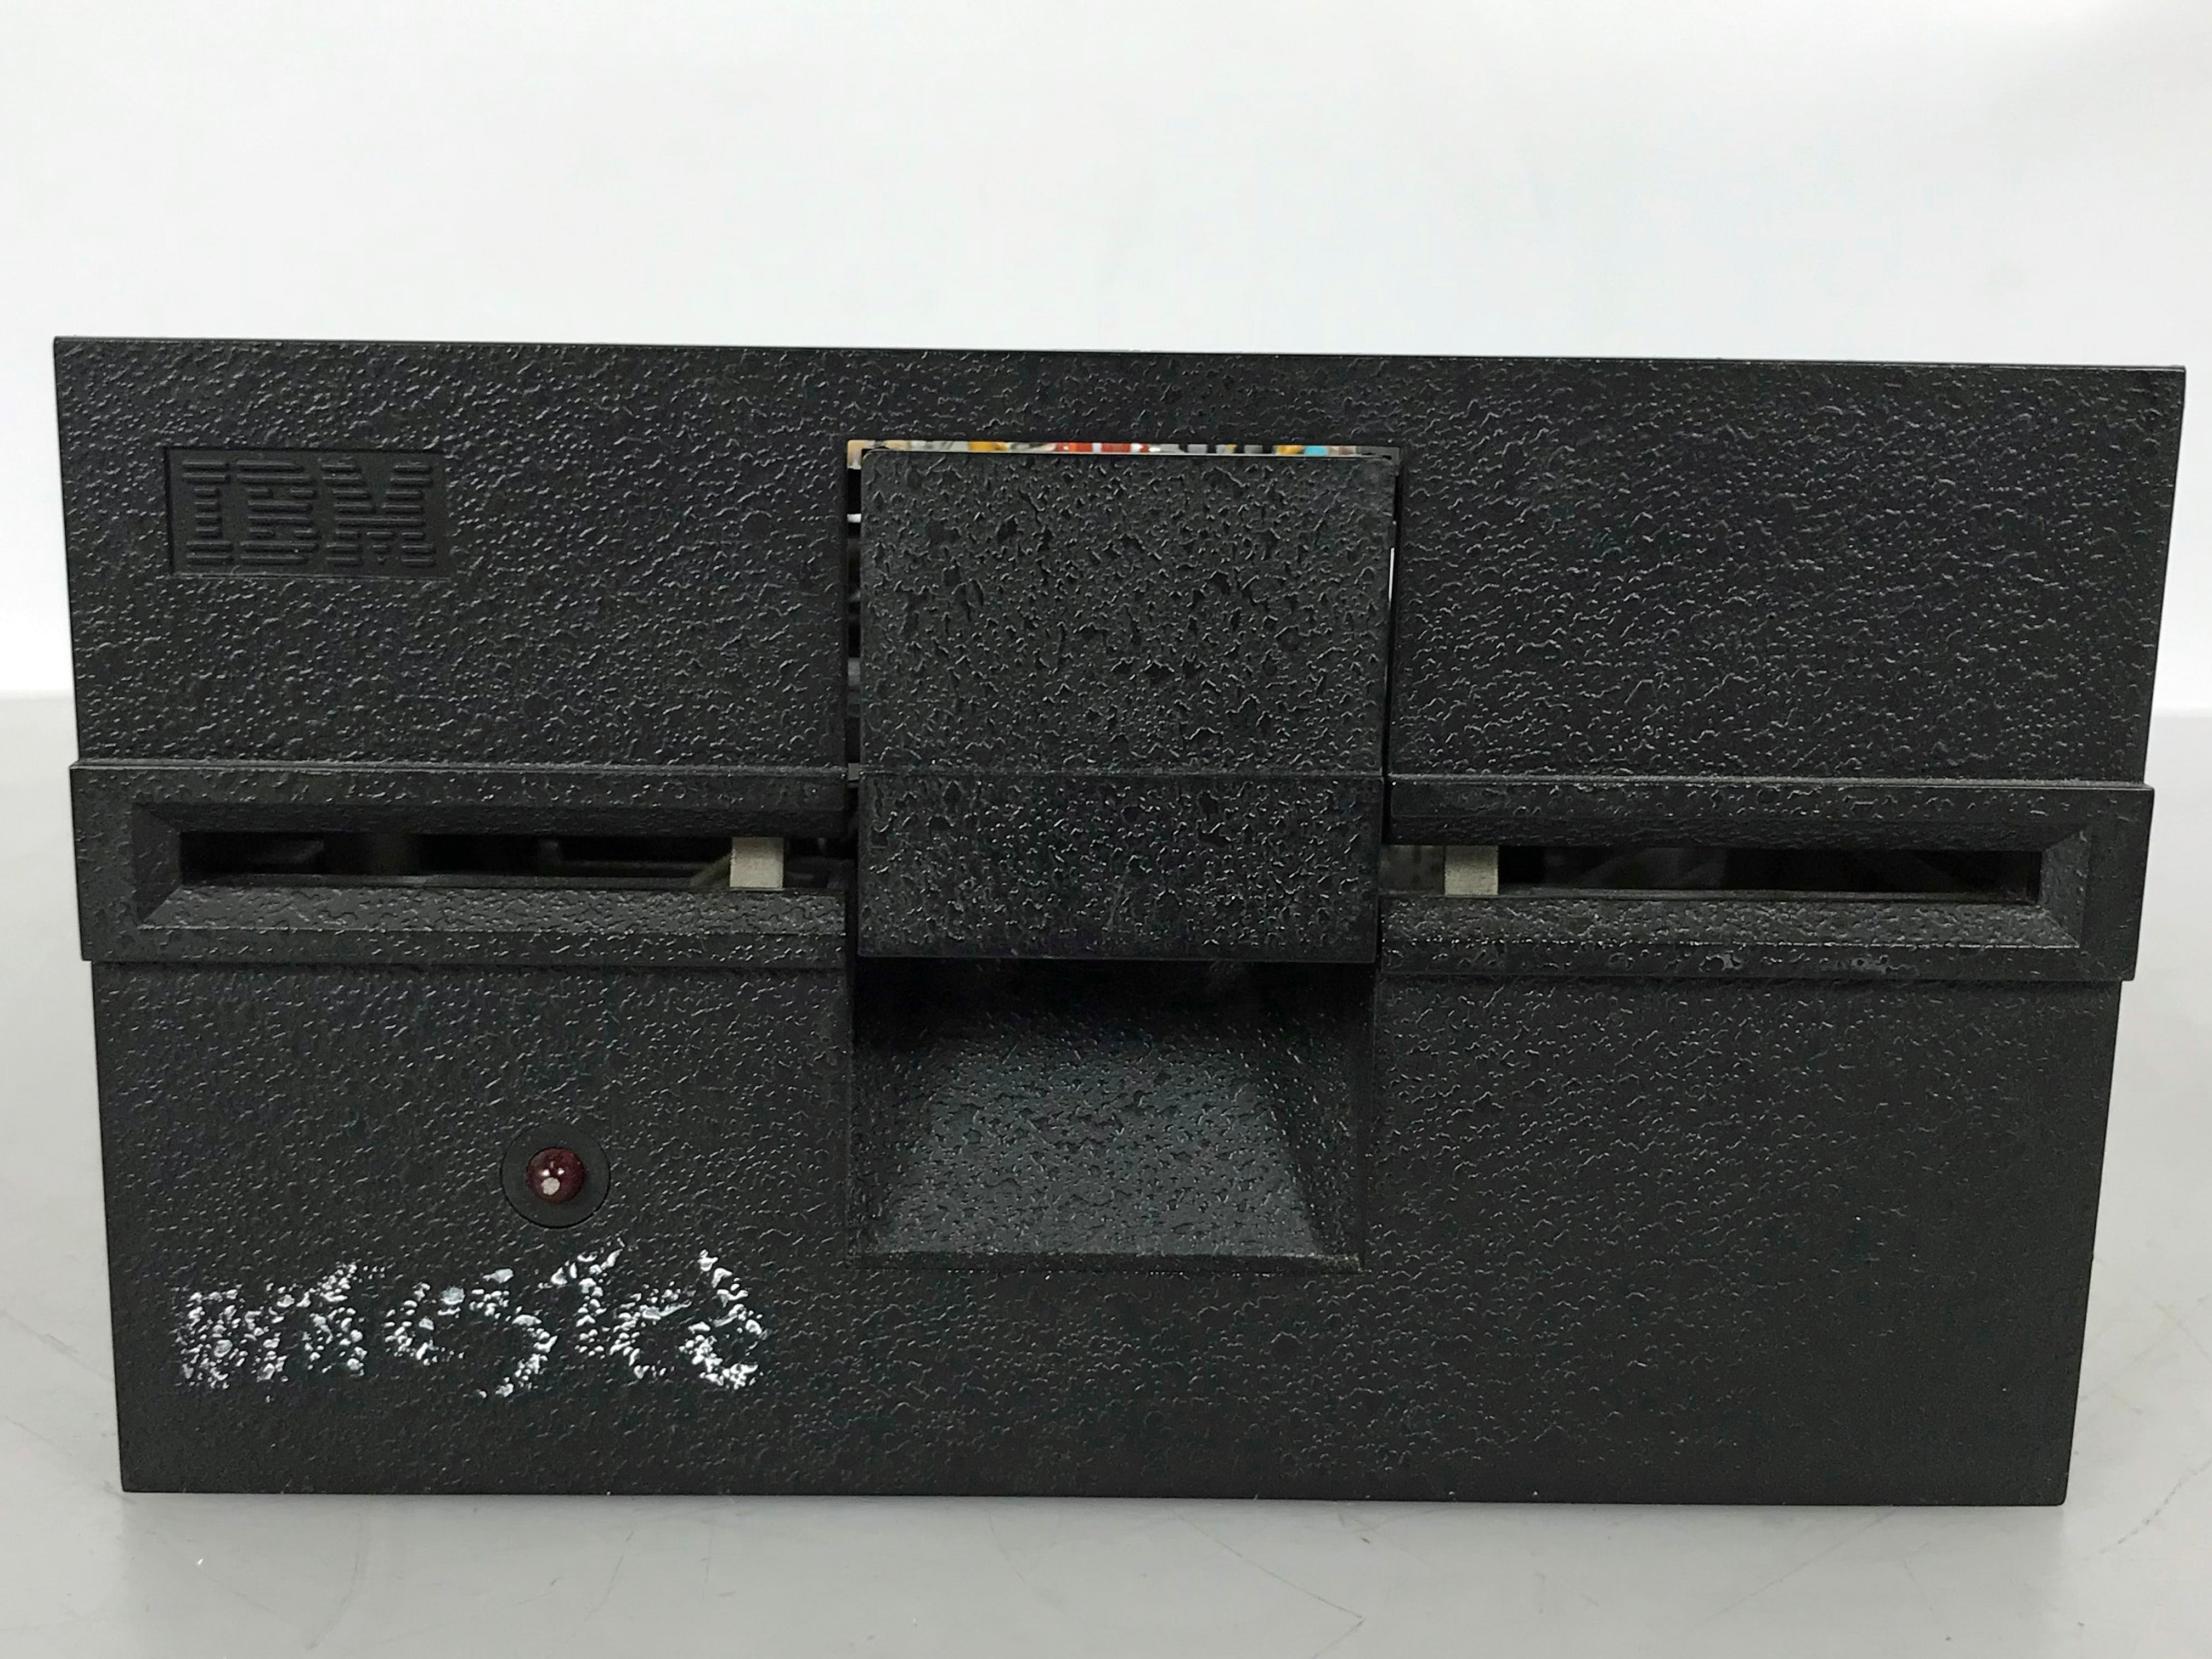 Tandon 5¼" TM-100-2A Floppy Disk Drive